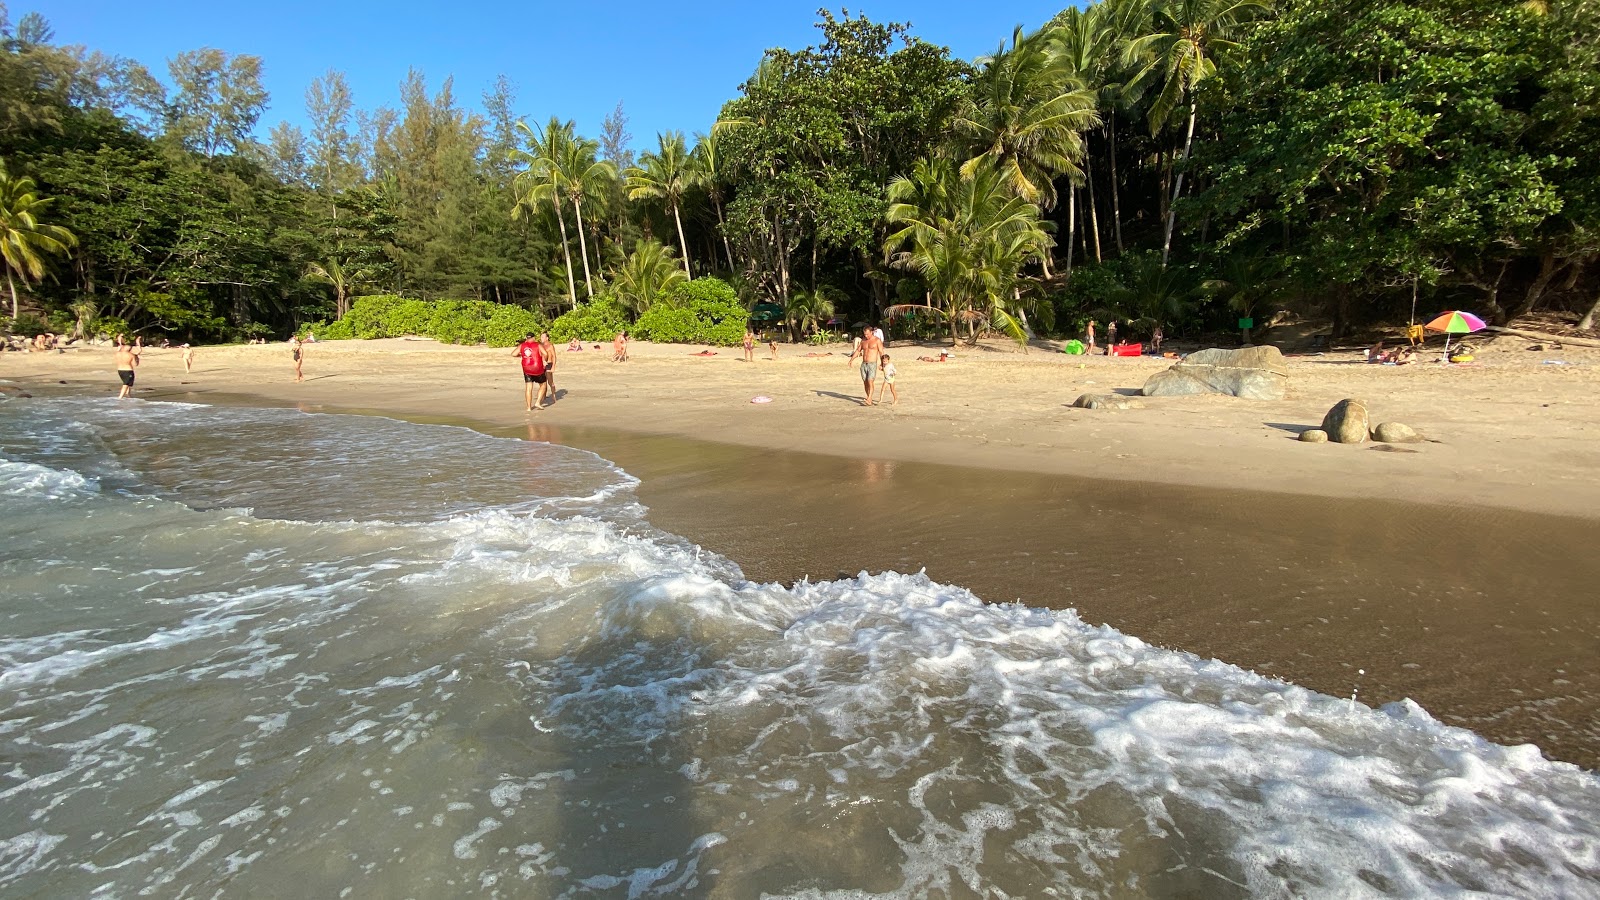 Foto di Banana Beach ubicato in zona naturale